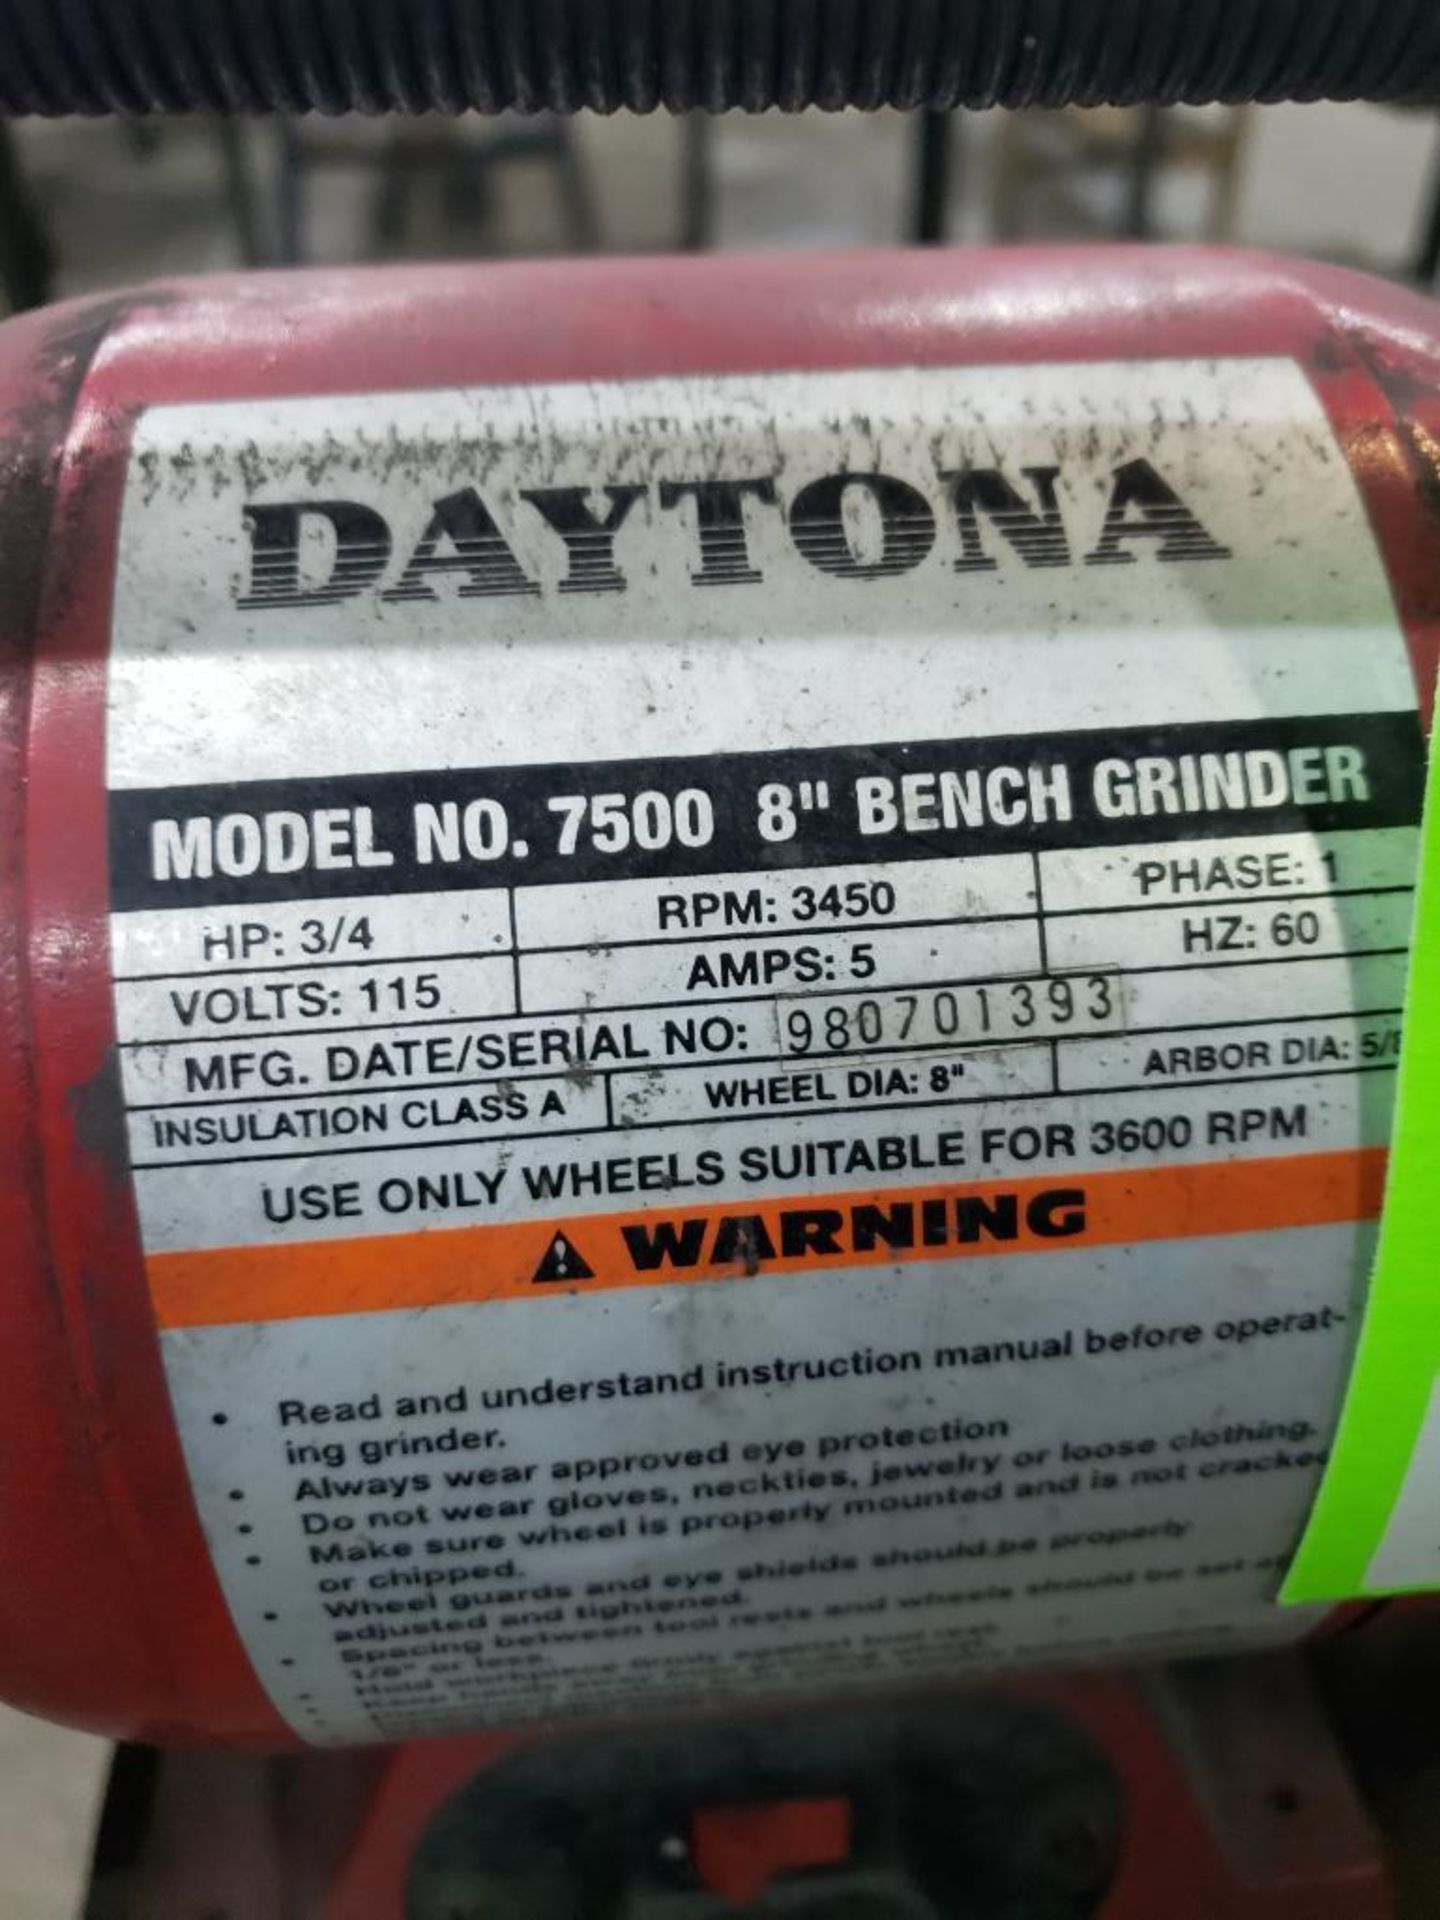 8" Daytona bench grinder. Model 7500. Single phase 115v. - Image 2 of 4